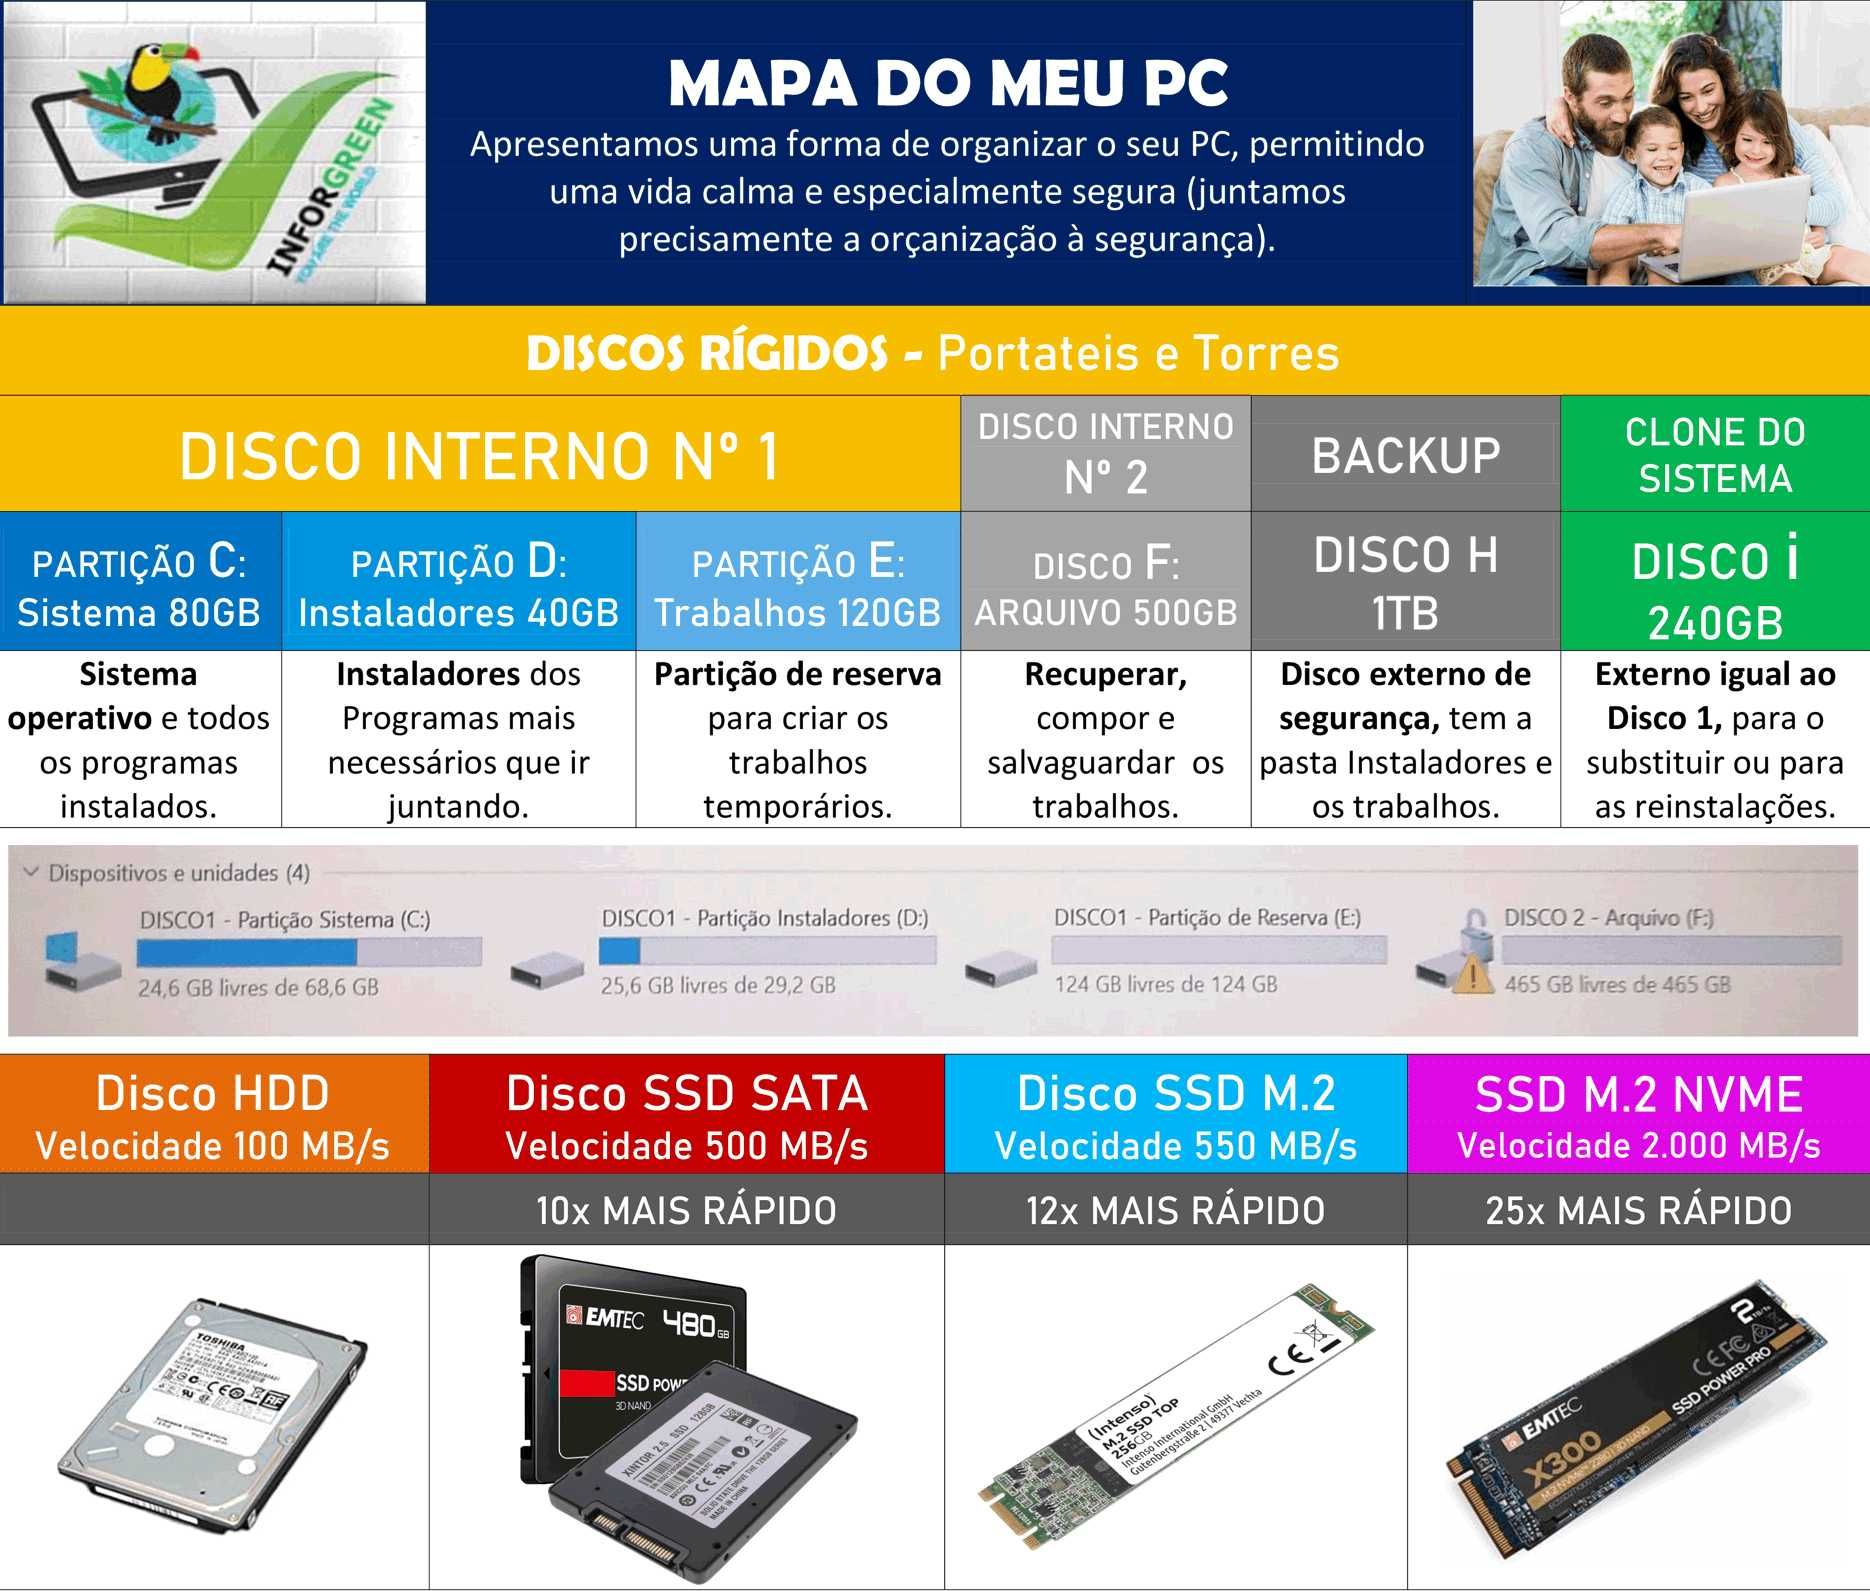 MINI-PC HP T530 16 GB RAM - TODAS AS CONFIGURAÇÕES  - SEMINOVO